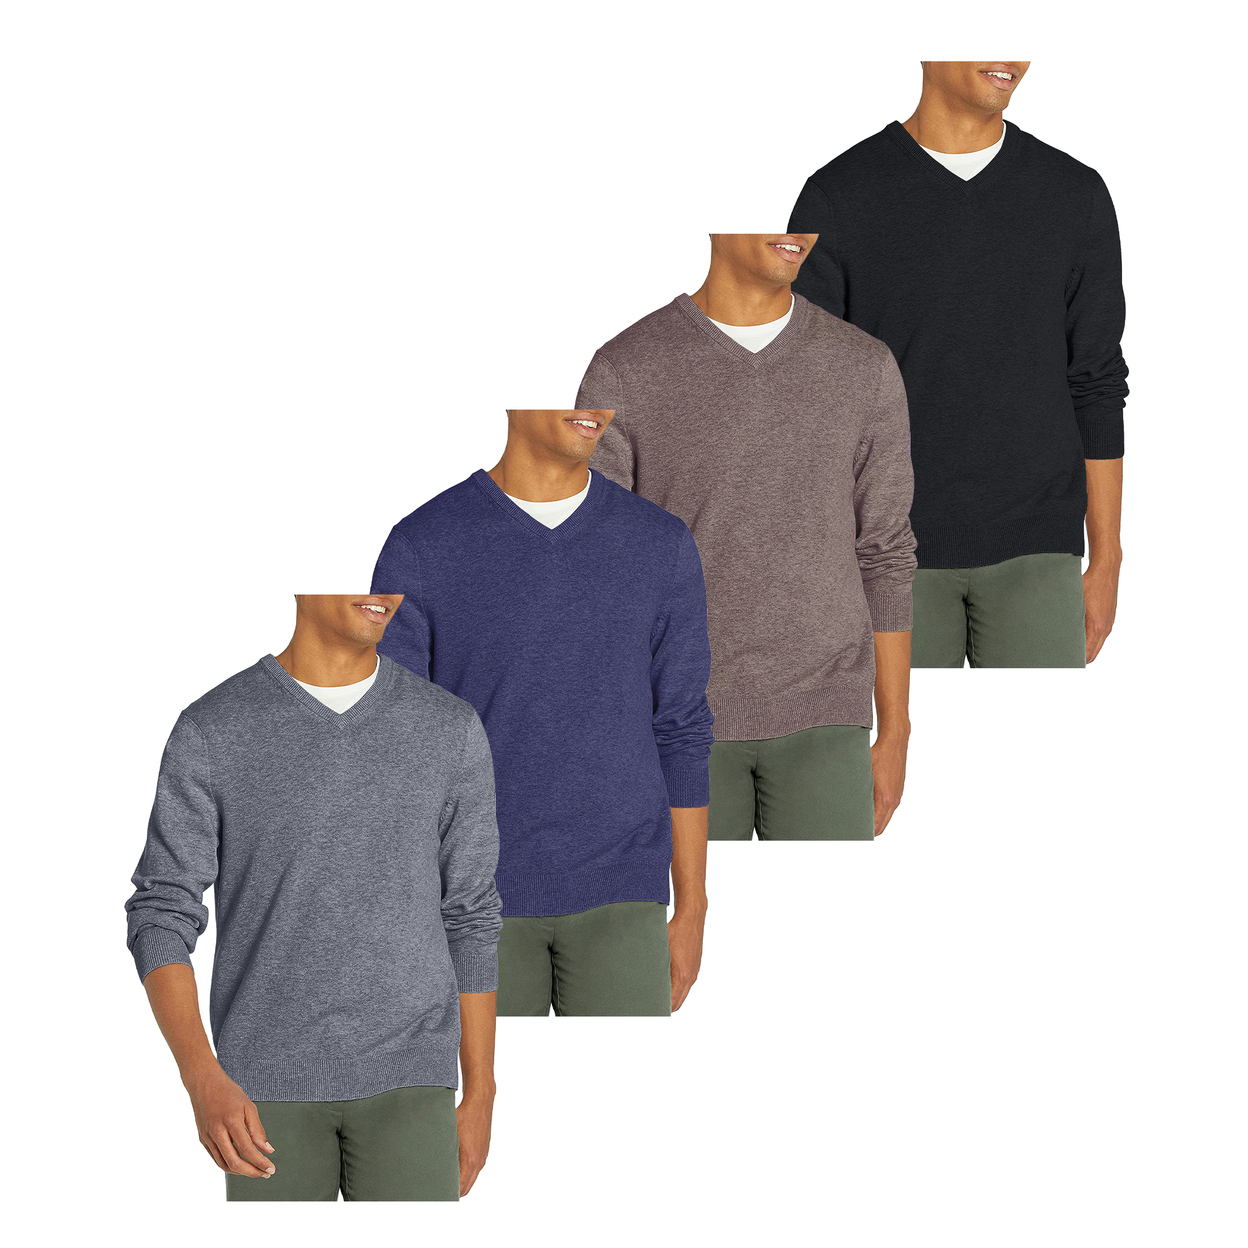 2-Pack: Men's Casual Ultra Soft Slim Fit Warm Knit V-Neck Sweater - Black & Grey, Medium